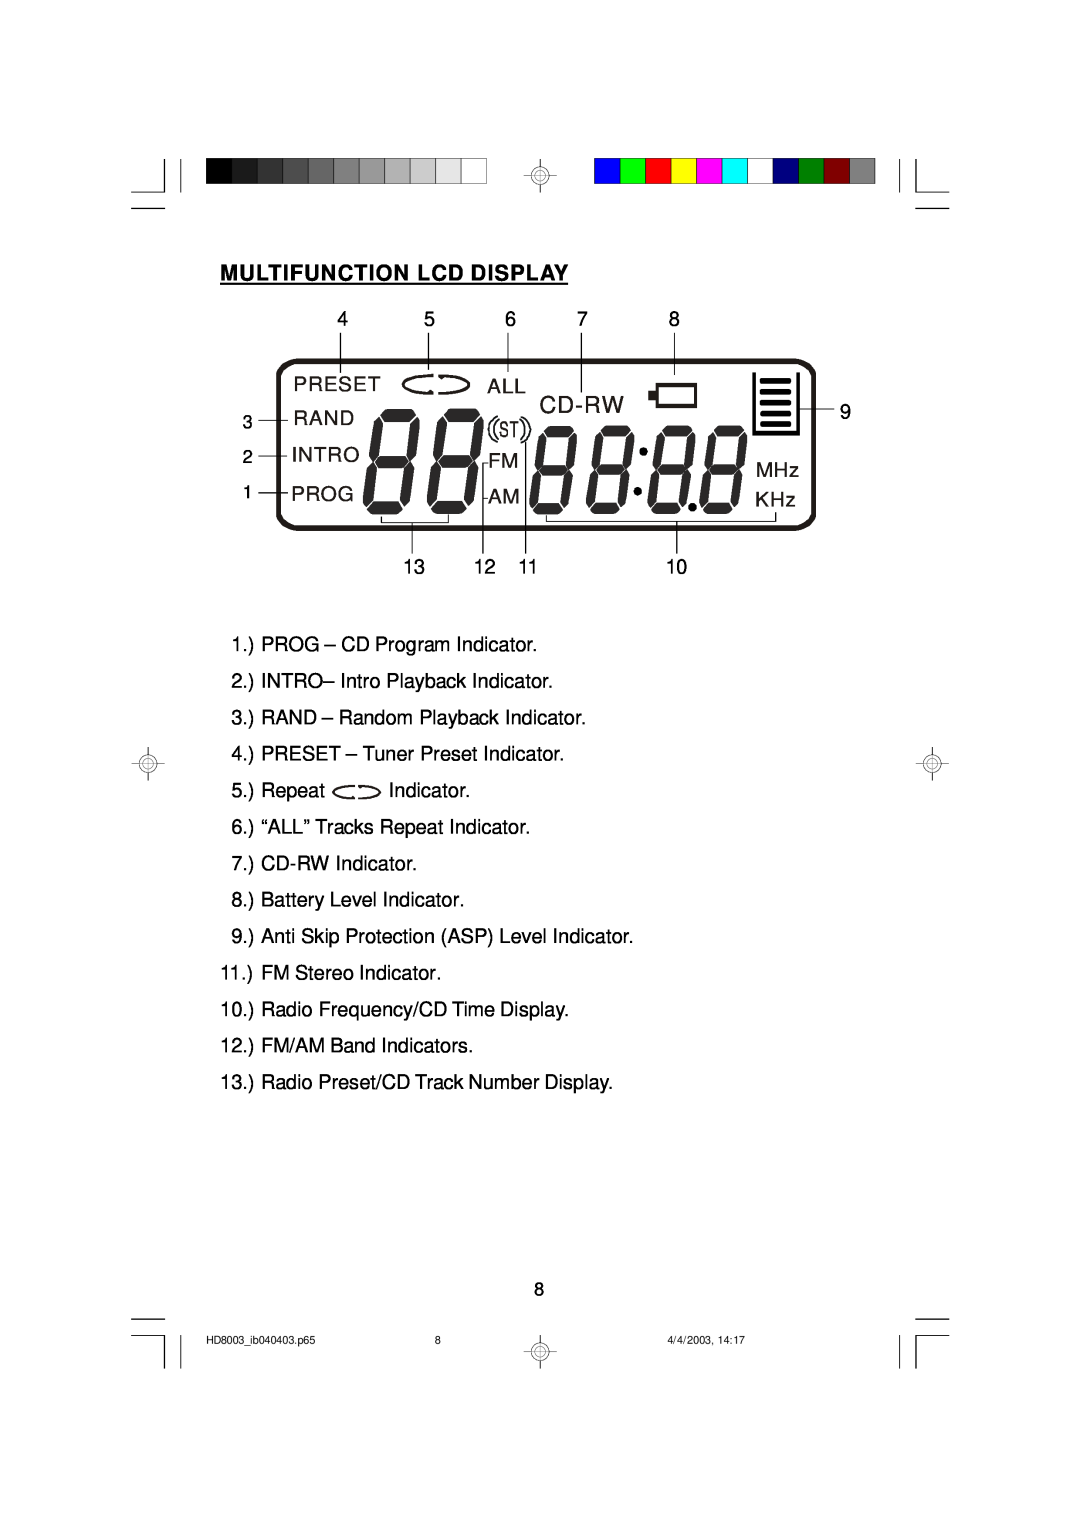 Emerson HD8003 owner manual Multifunction Lcd Display, Cd-Rw, Preset, Rand, Intro, Prog 